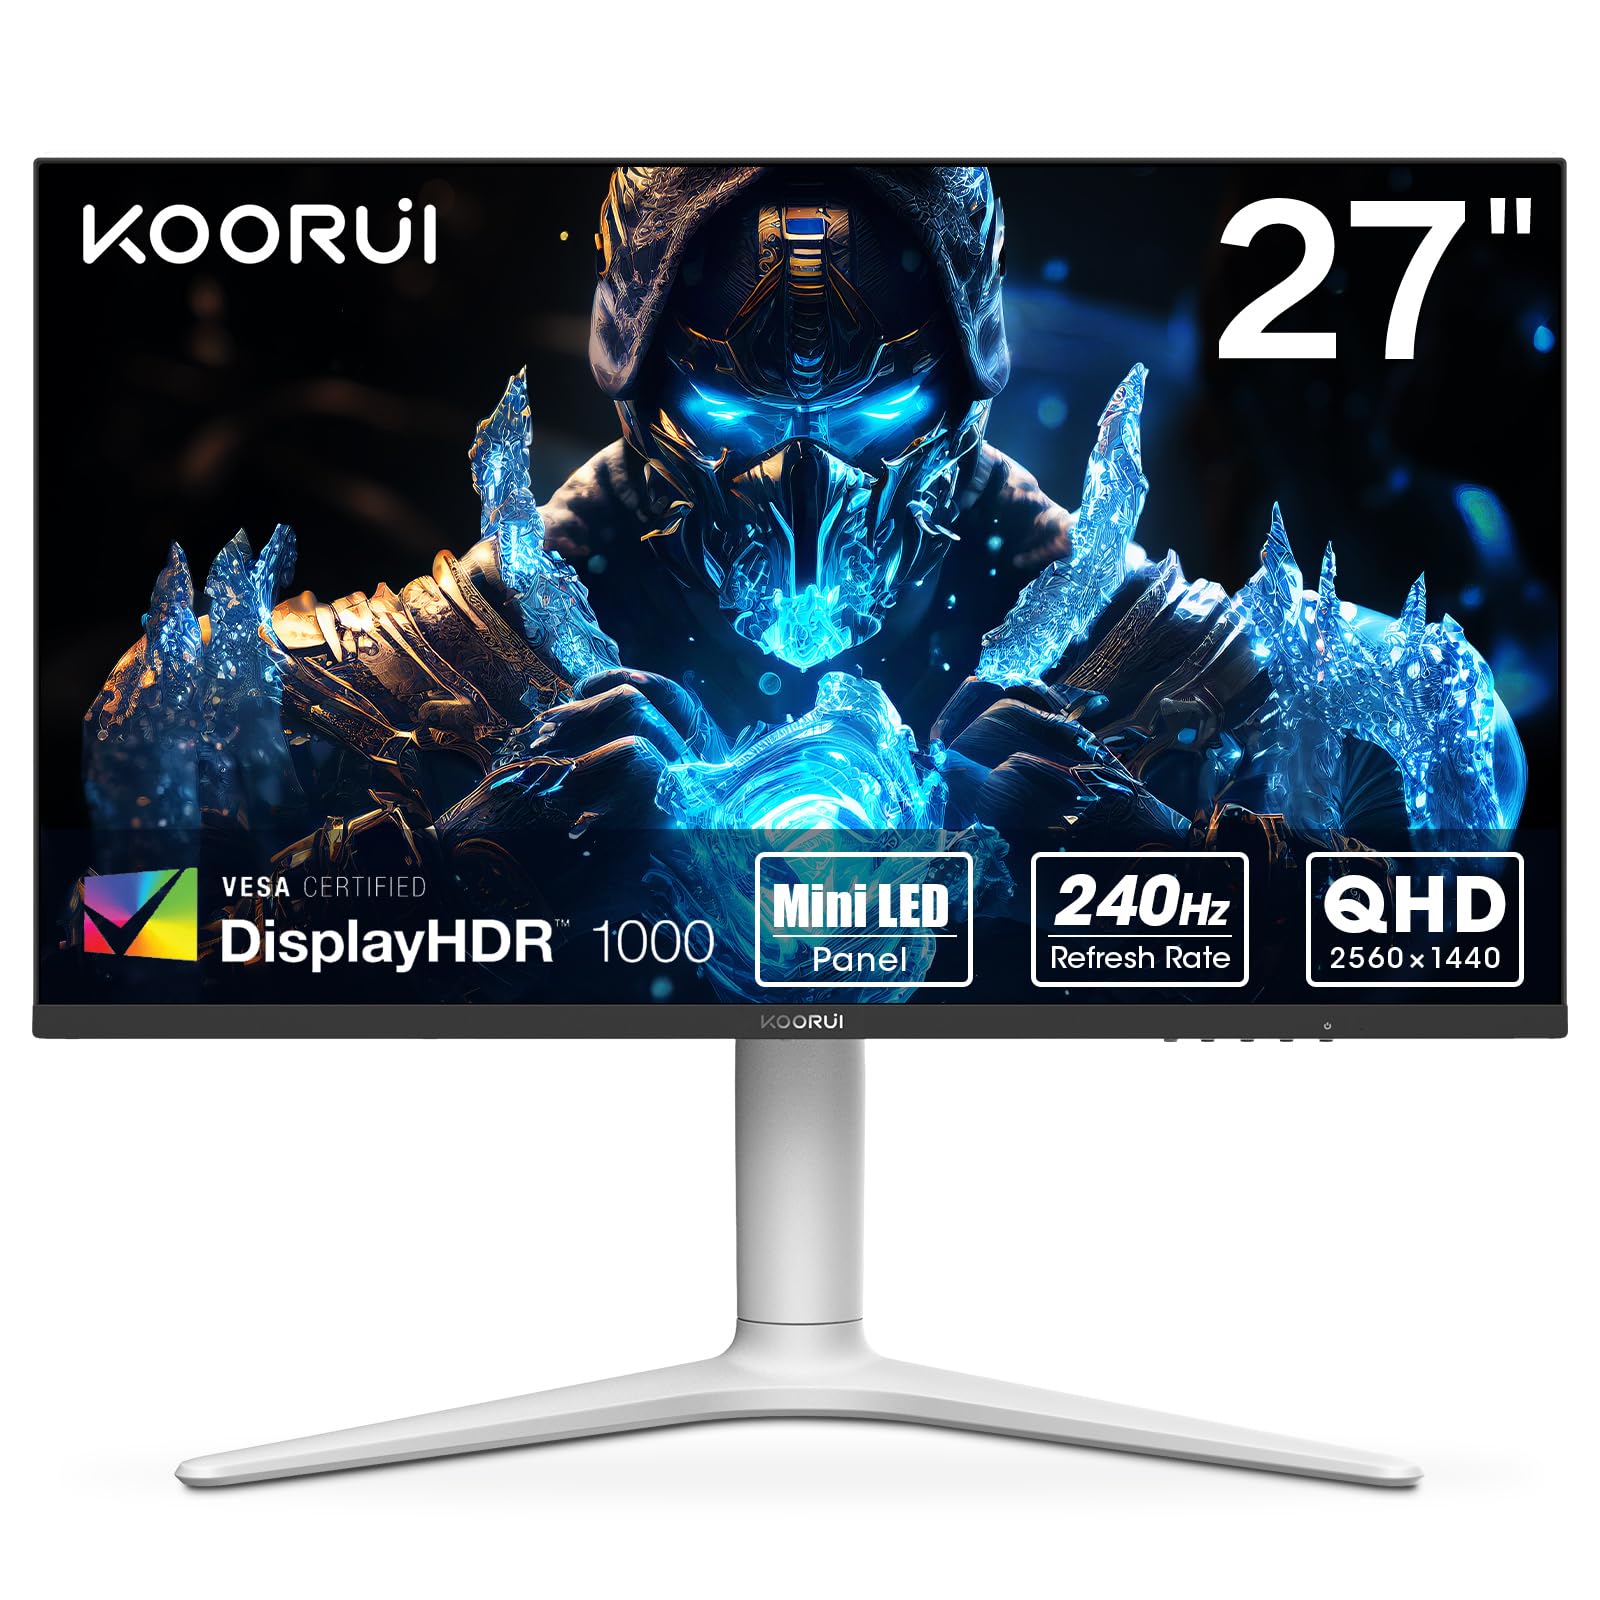 27" Koorui GN10 1440p 240Hz Mini-LED Gaming Monitor $330 + Free Shipping